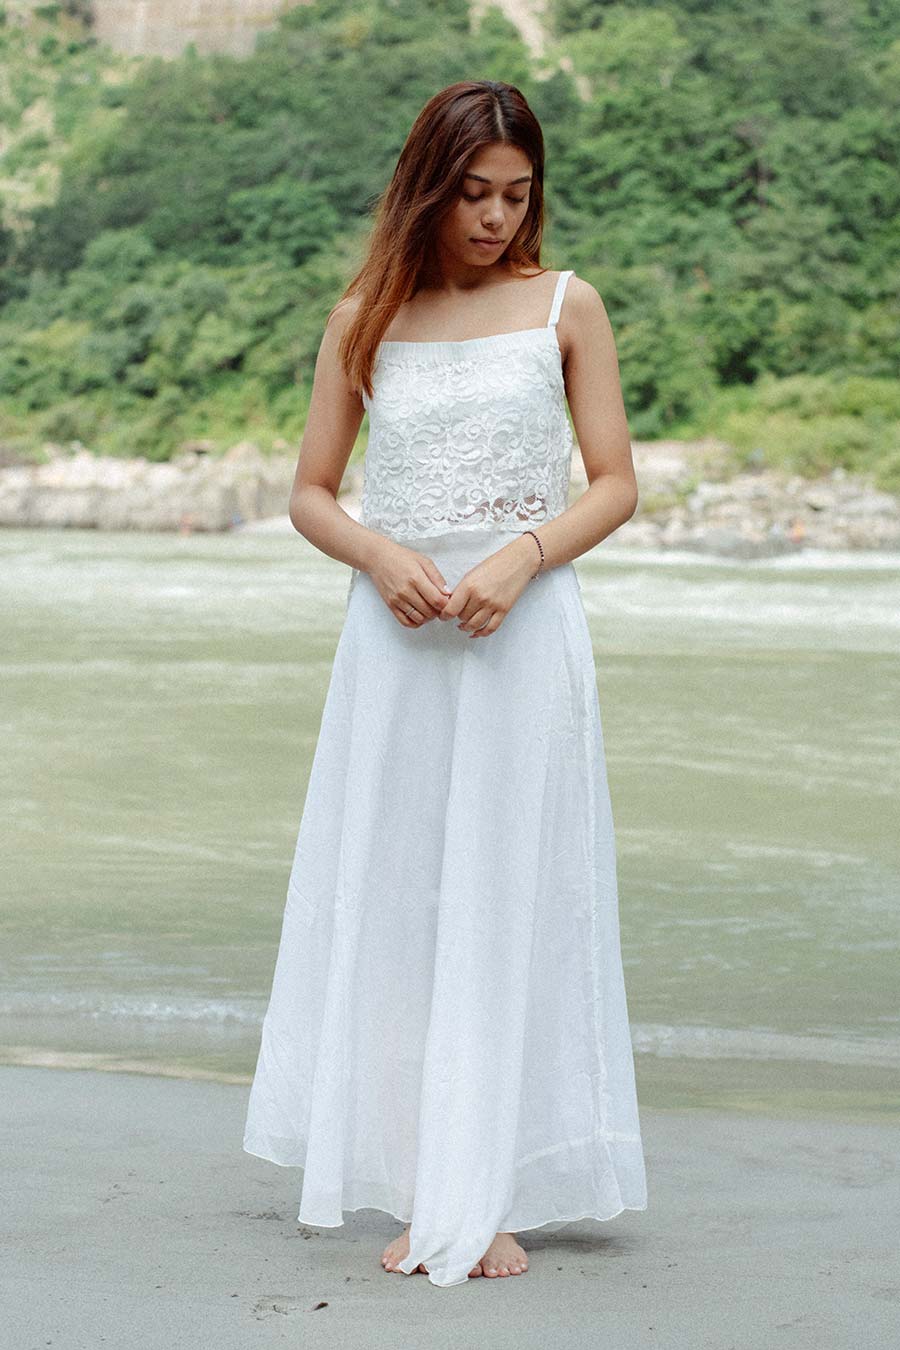 ELBA - White Lace Top & Skirt Set